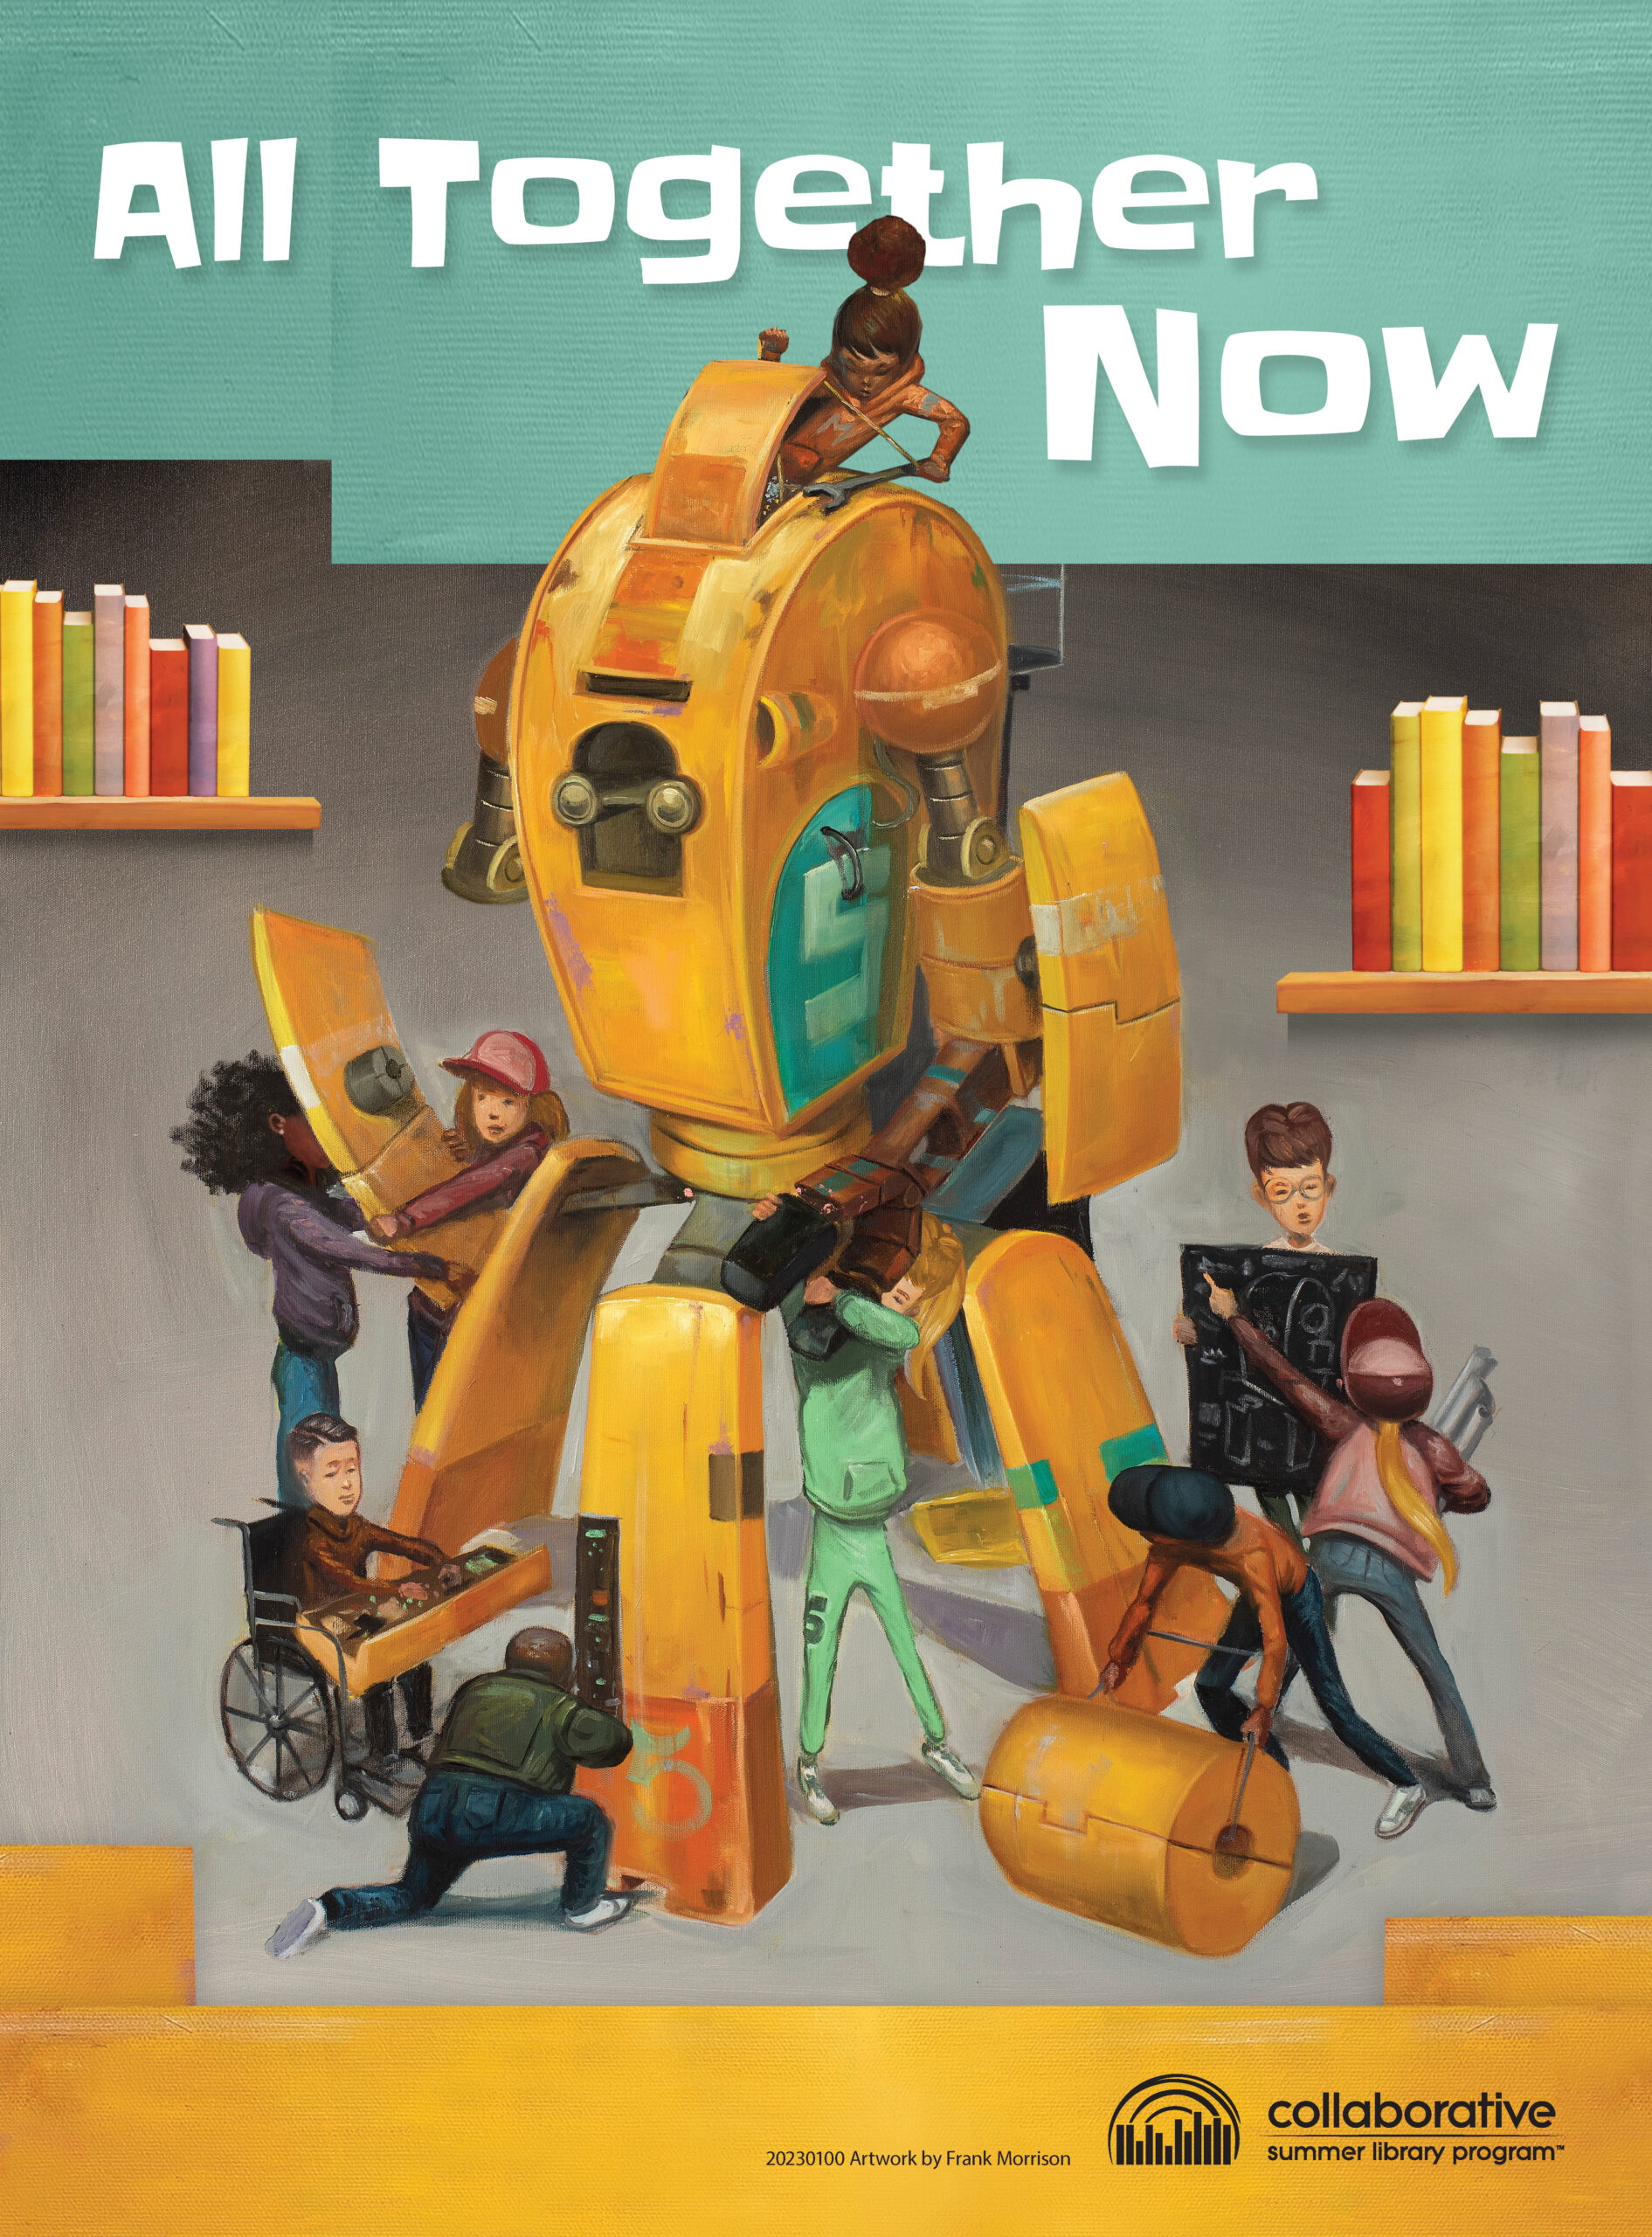 children building book robot under slogan 'All Together Now'